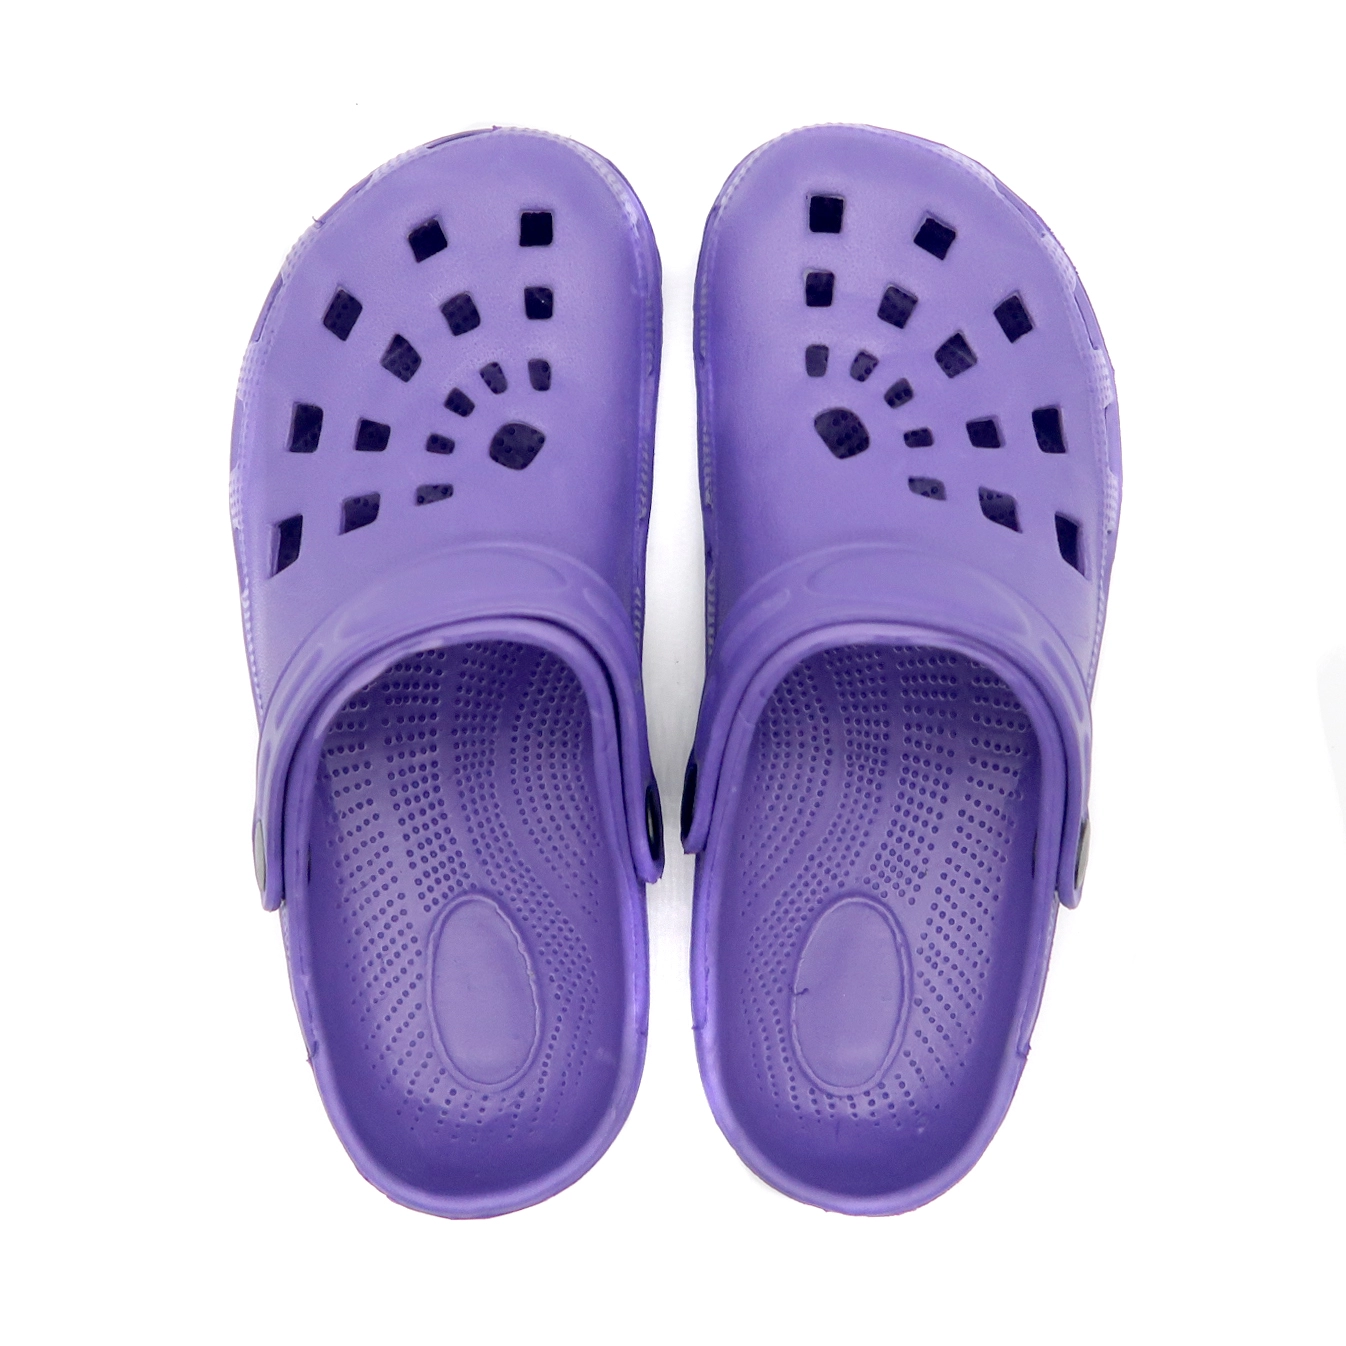 Großhandel benutzerdefinierte Sommer Anti-Slippery atmungsaktive Clog-Schuhe